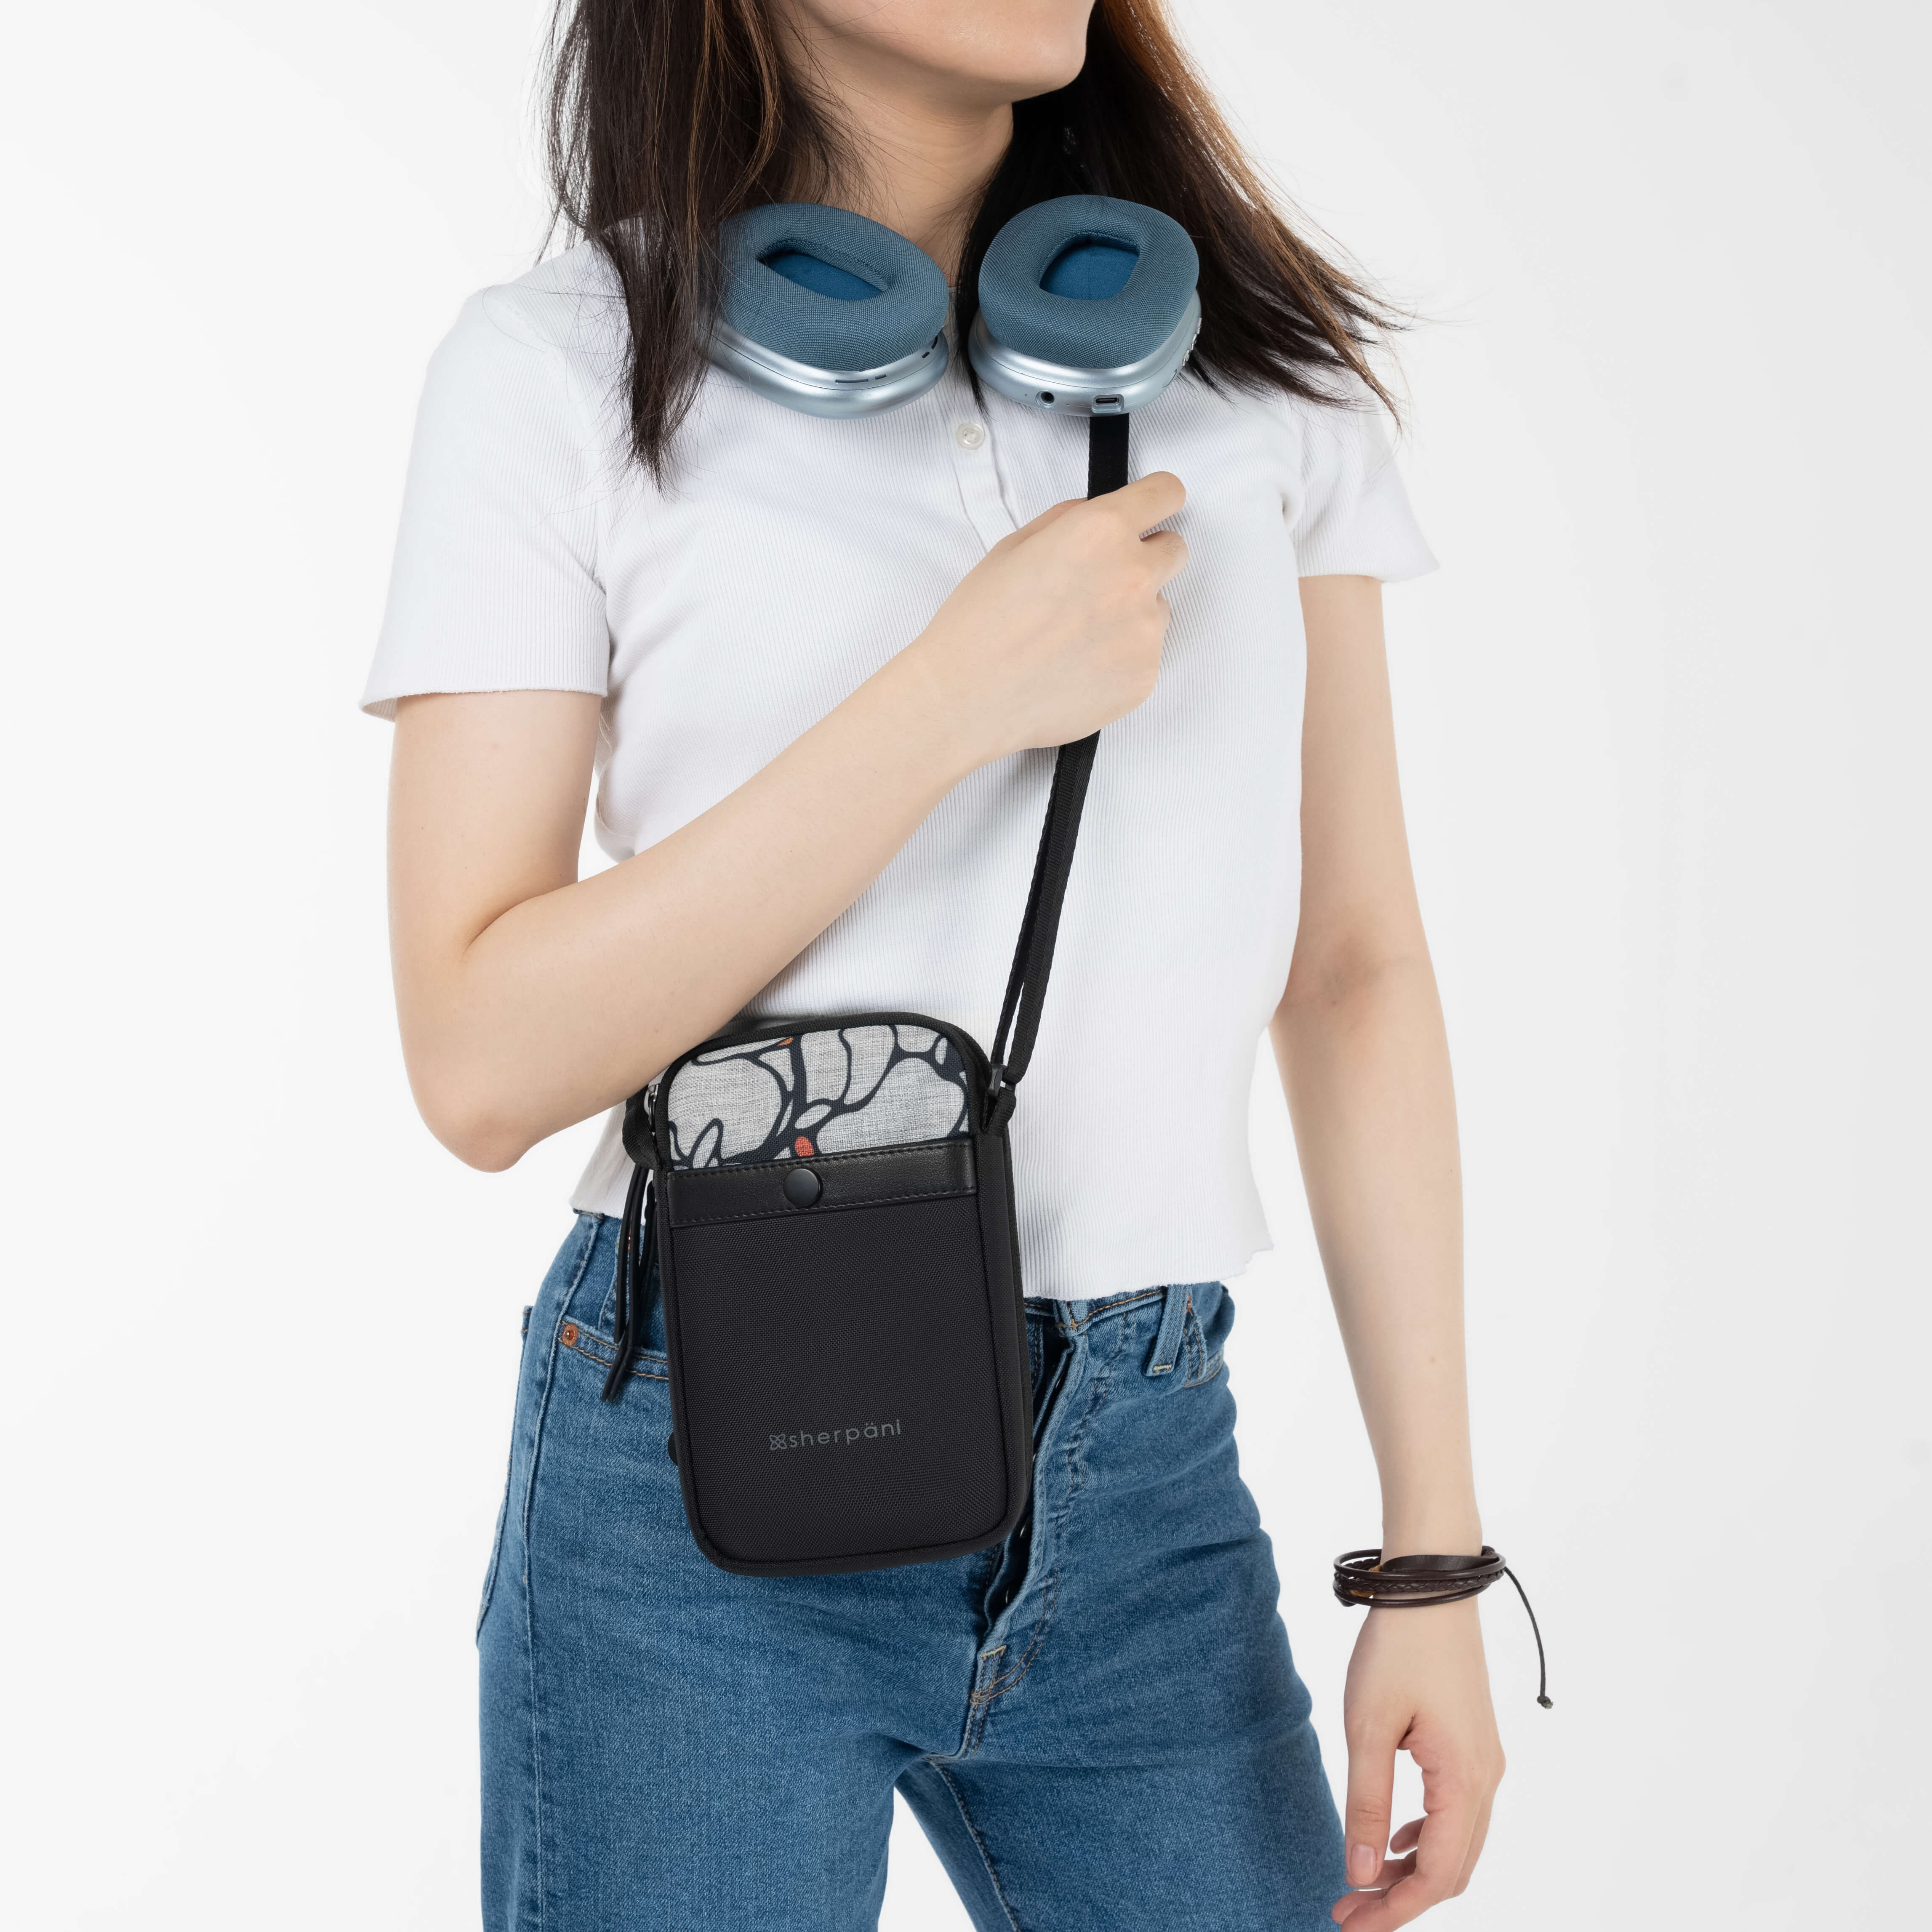 A model wearing Sherpani wallet purse for travel, the Simplicity in Sakura. 